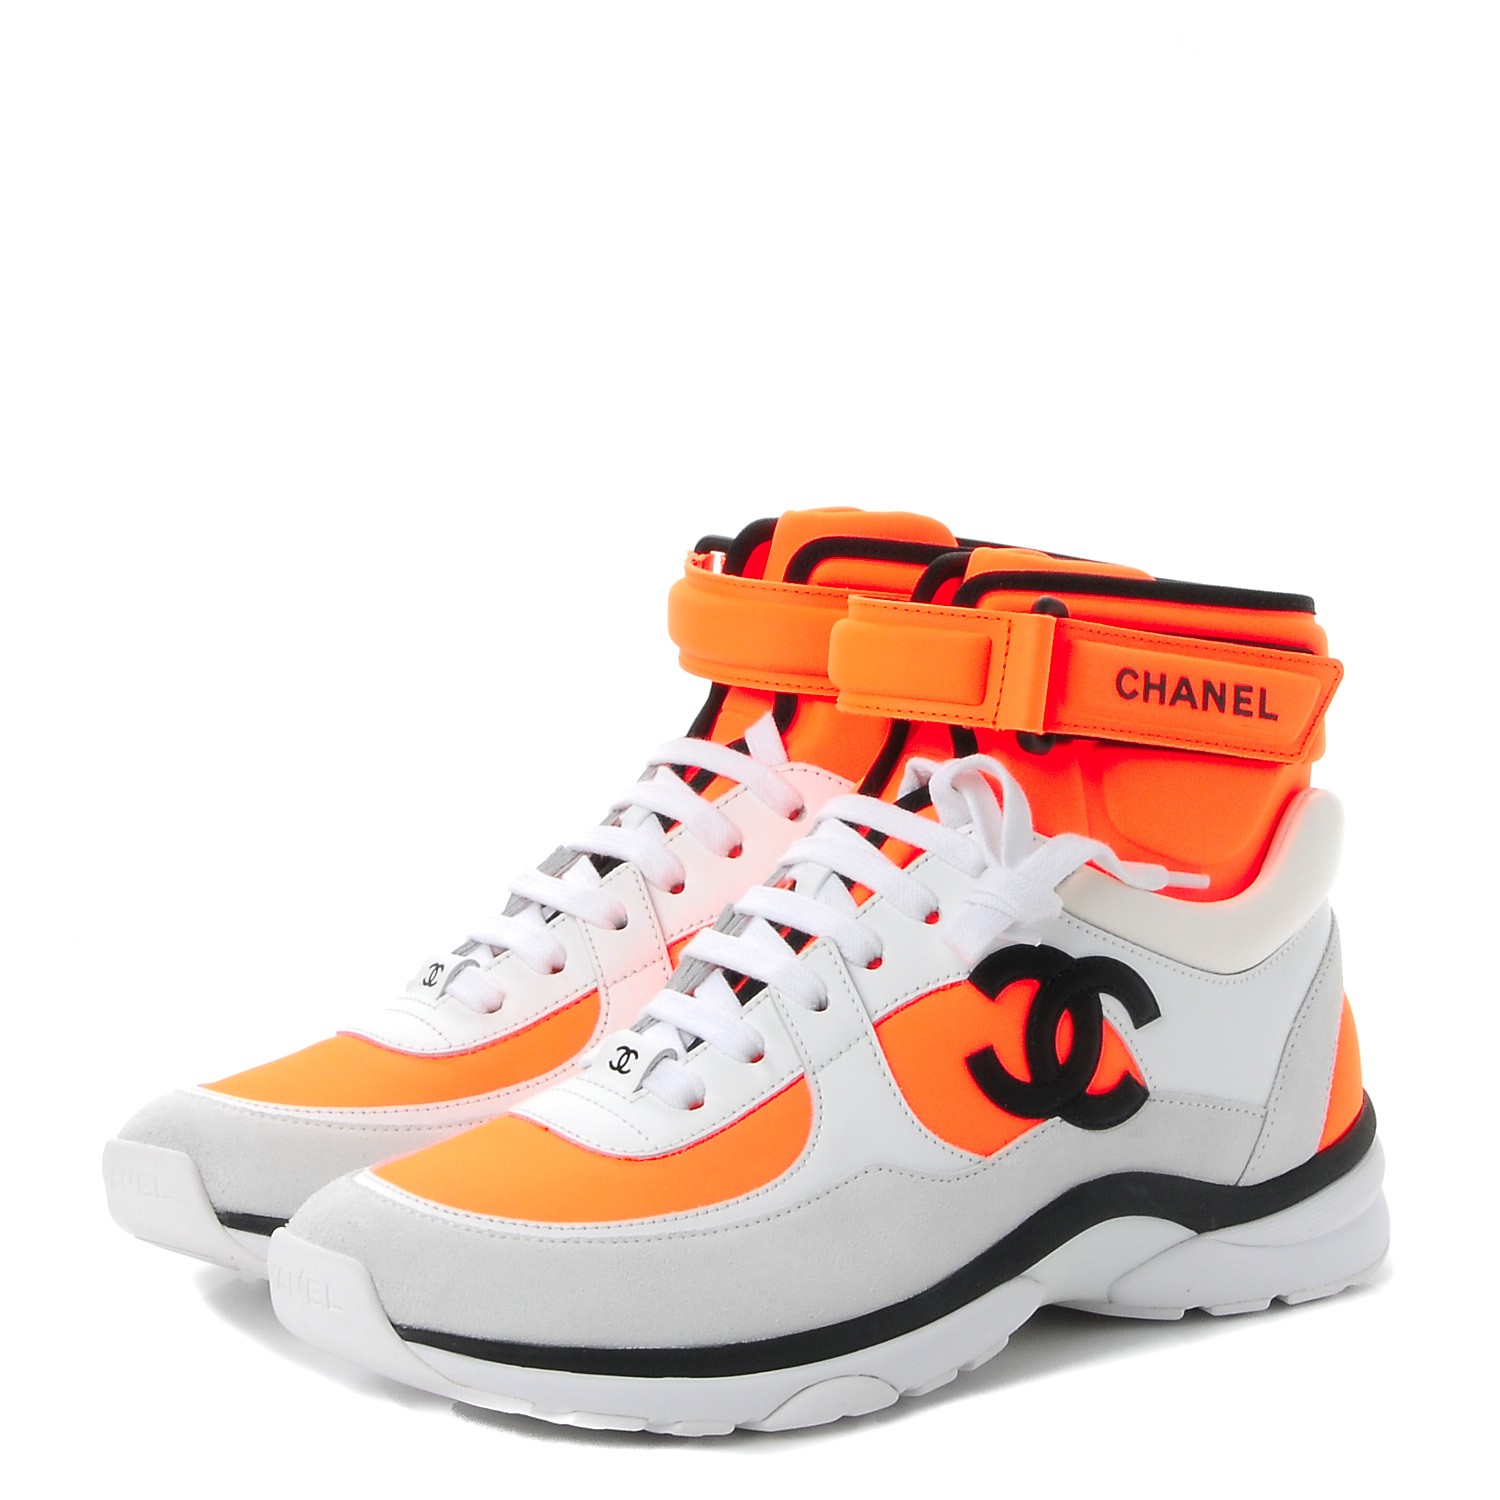 chanel sneakers white orange